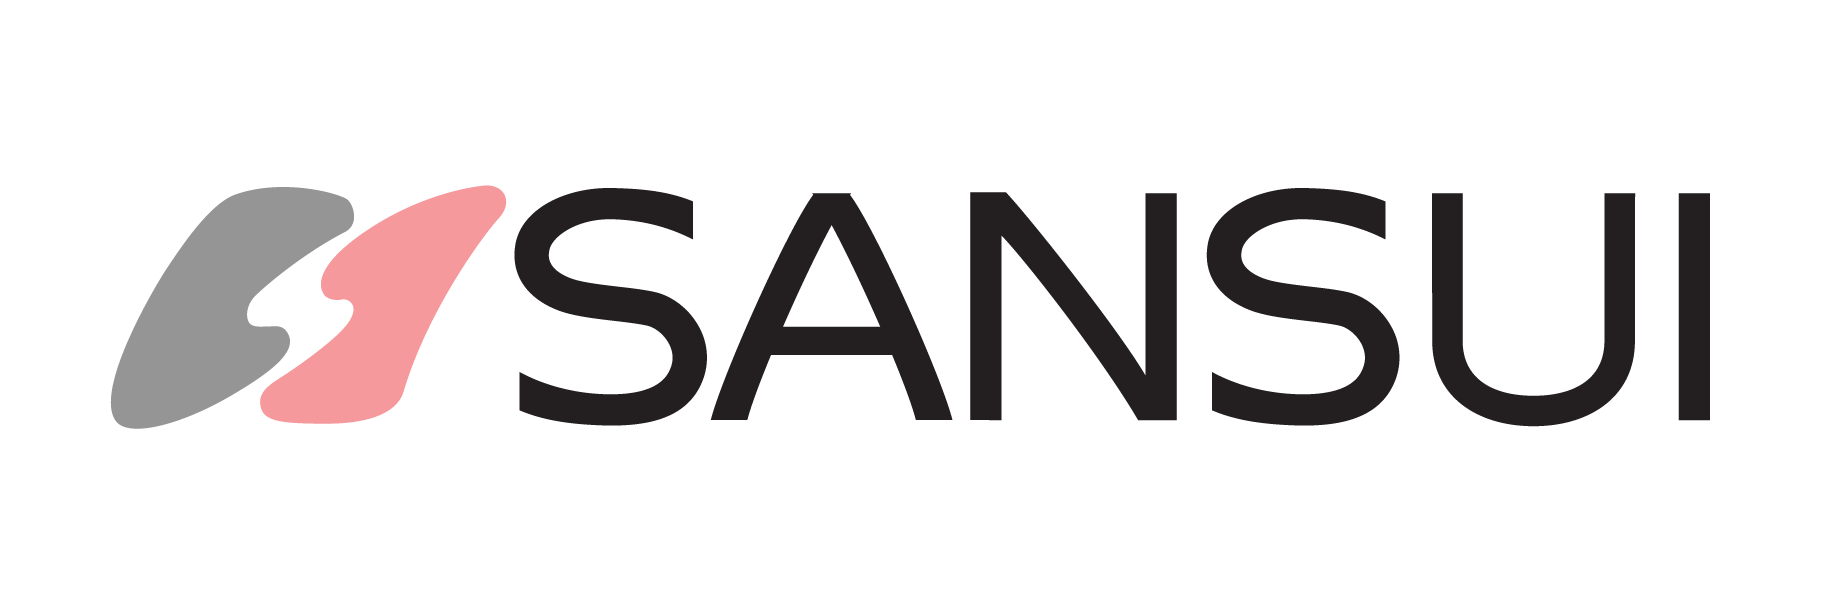 logo Sansui